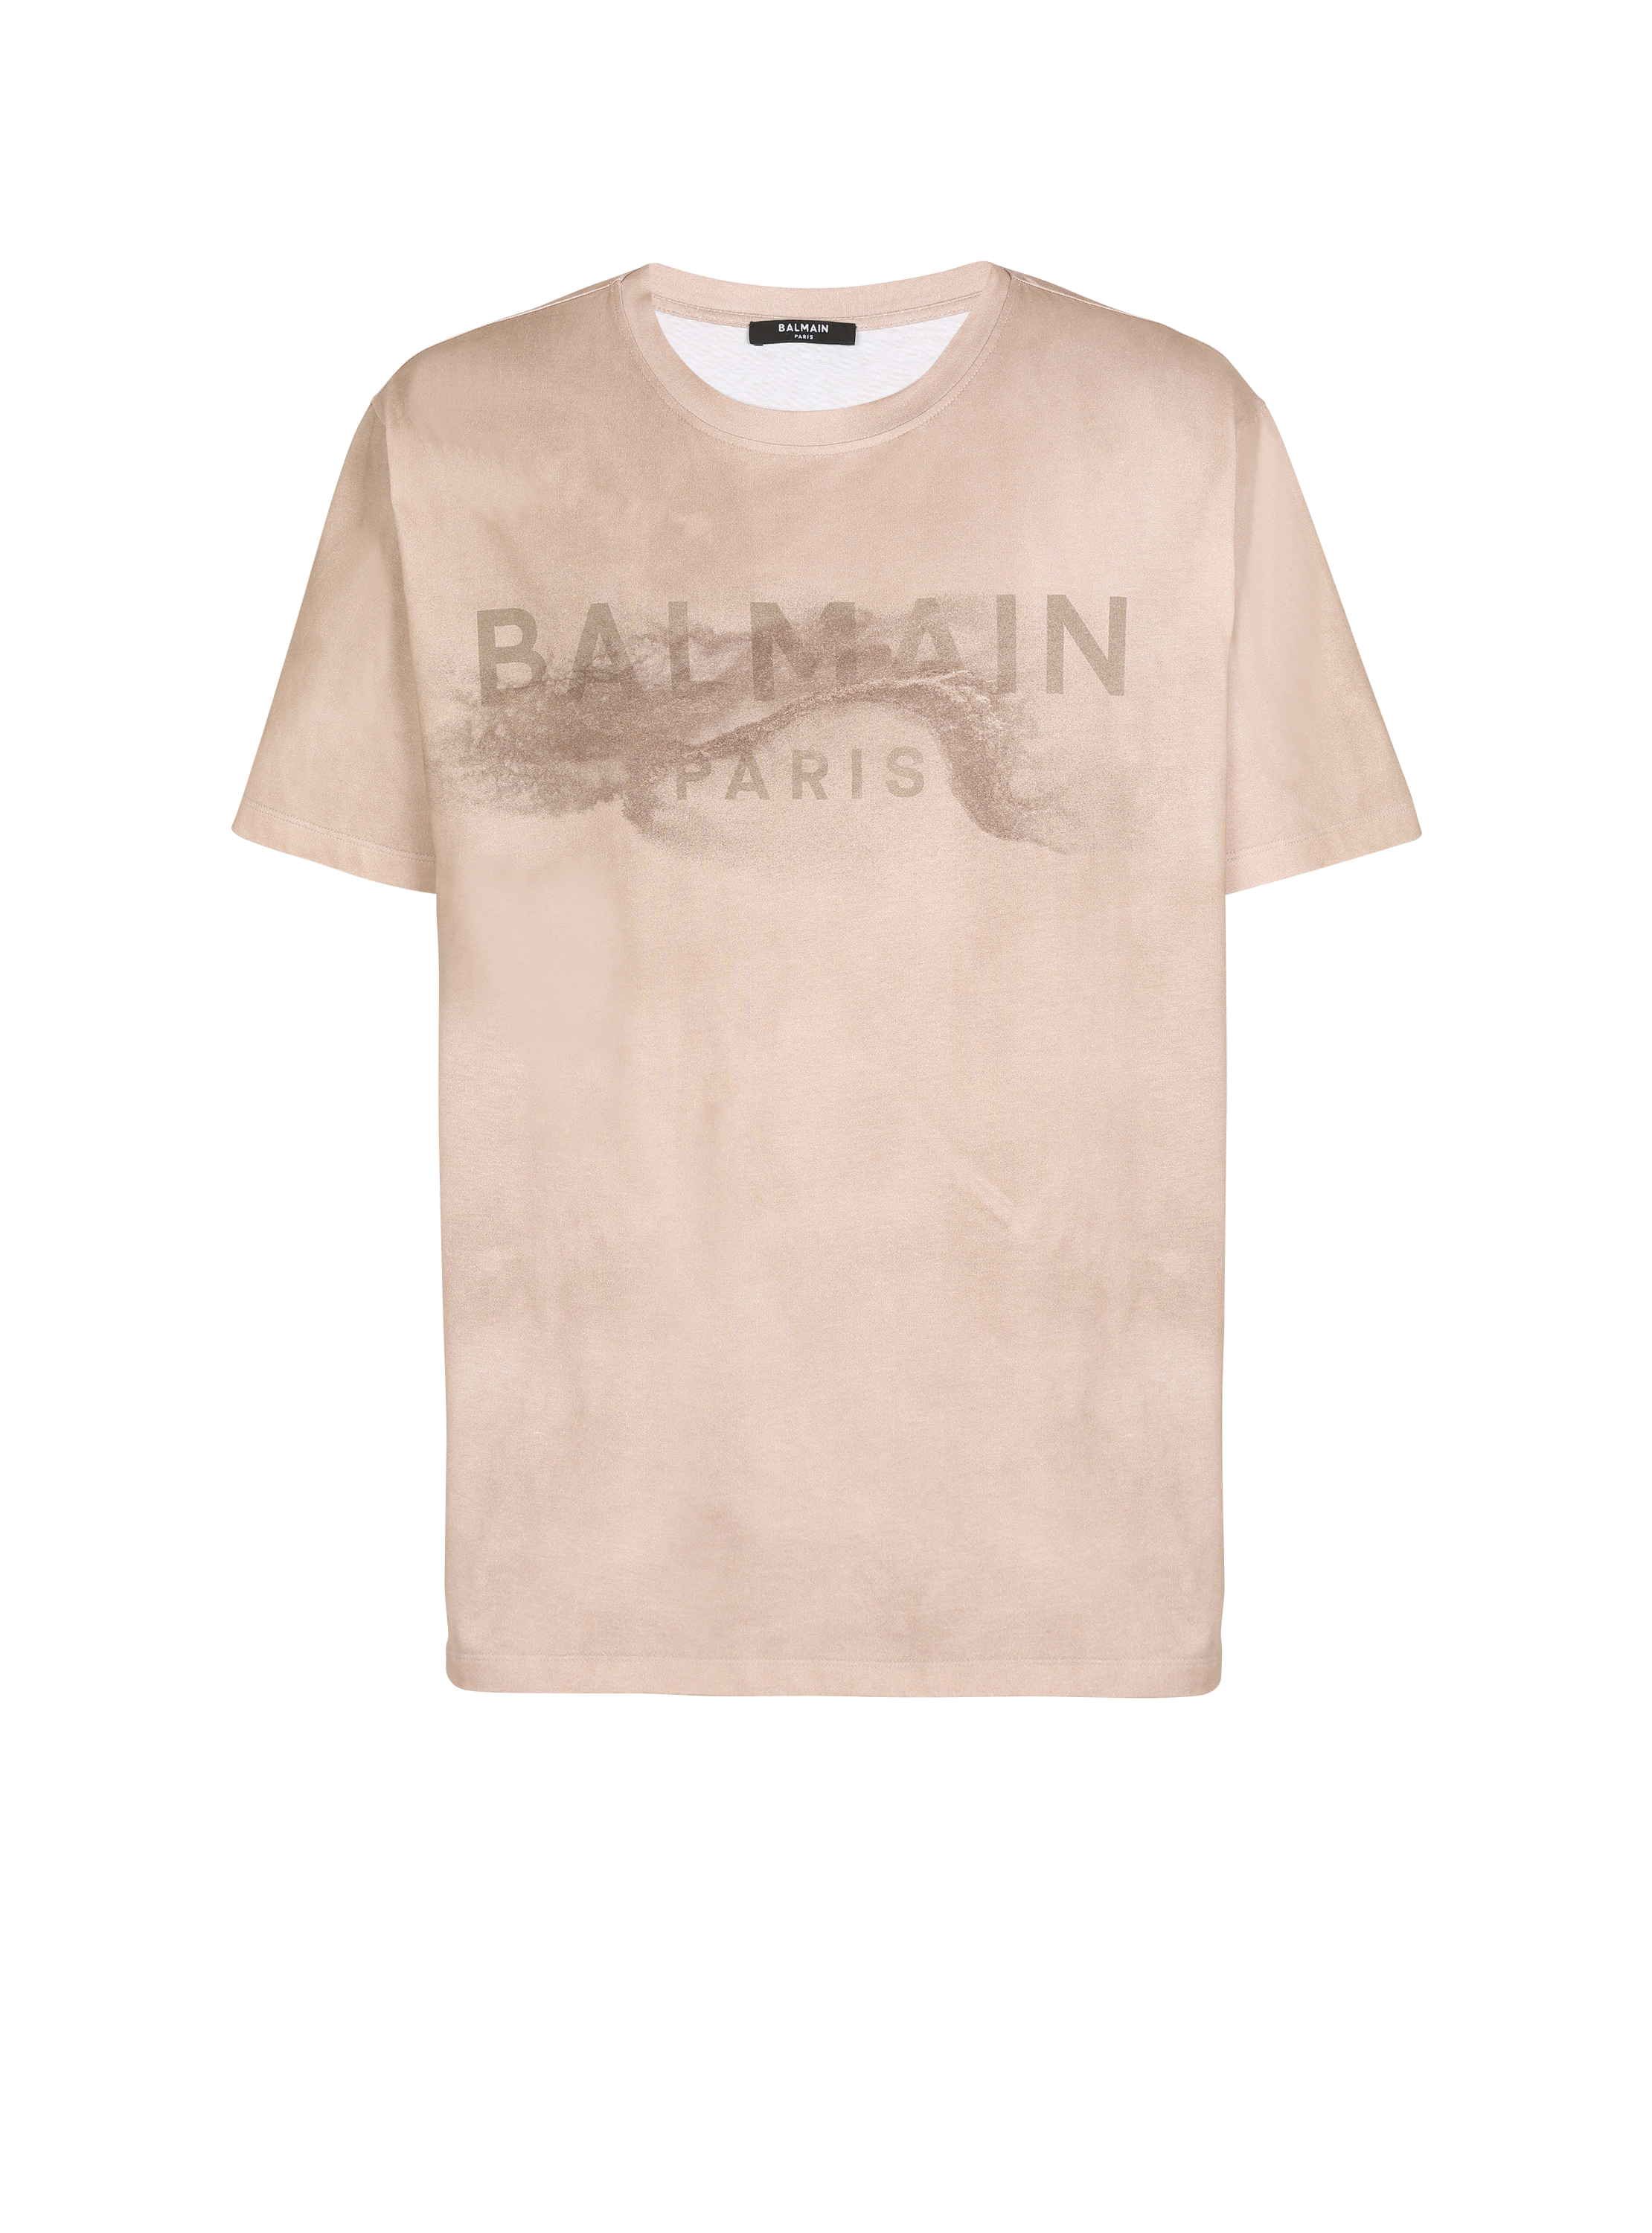 T-shirt in eco-responsible cotton with Balmain Paris desert logo, beige, hi-res